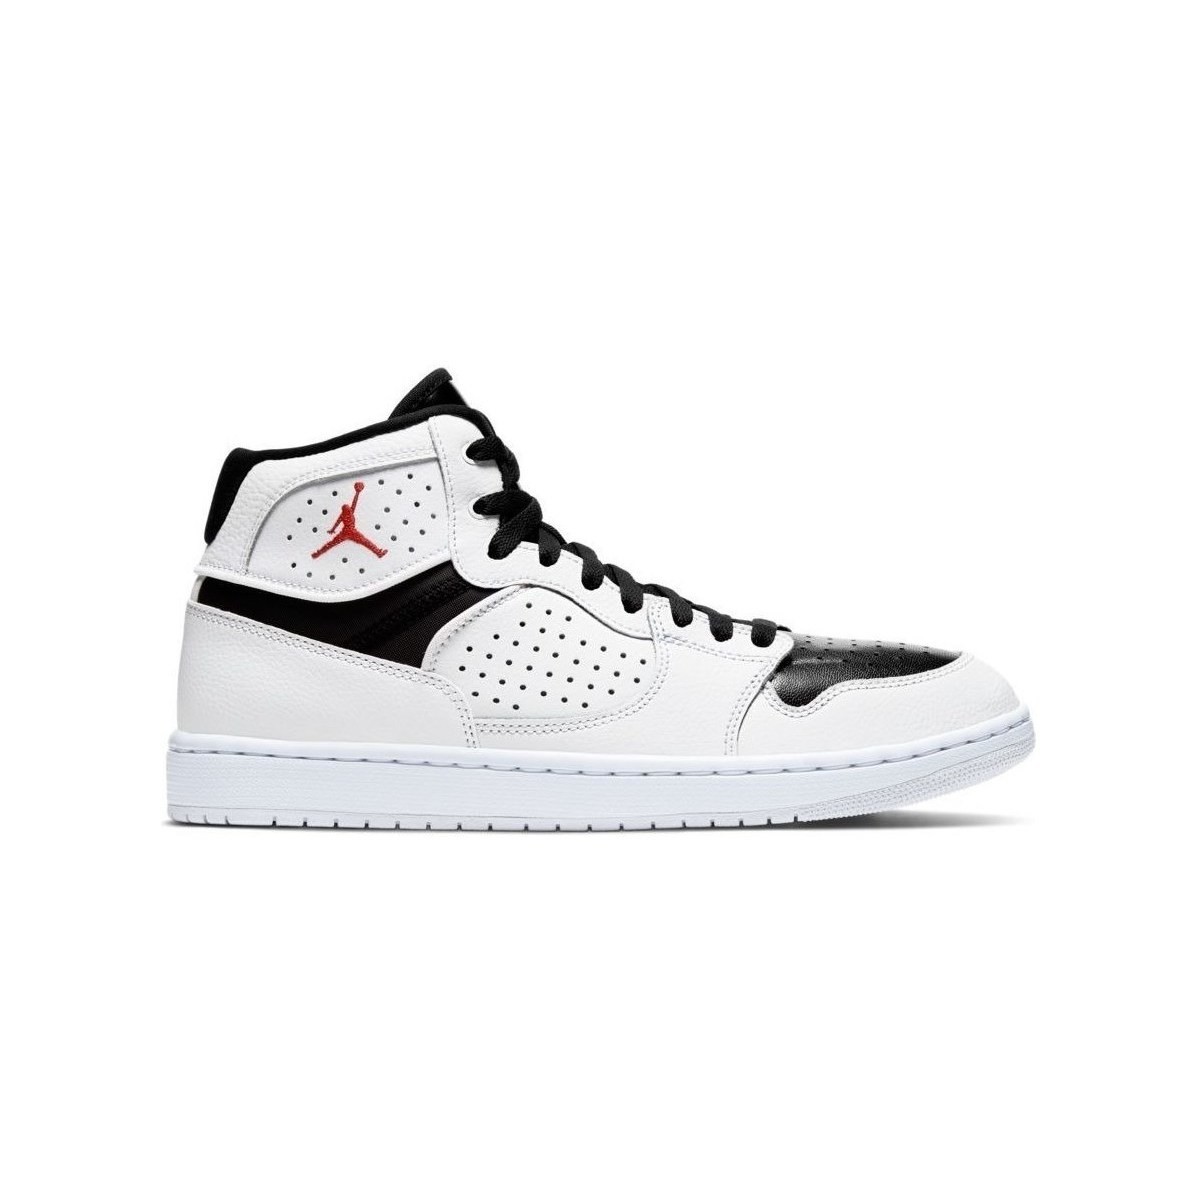 Schuhe Herren Boots Nike Air Jordan Access Schwarz, Weiß